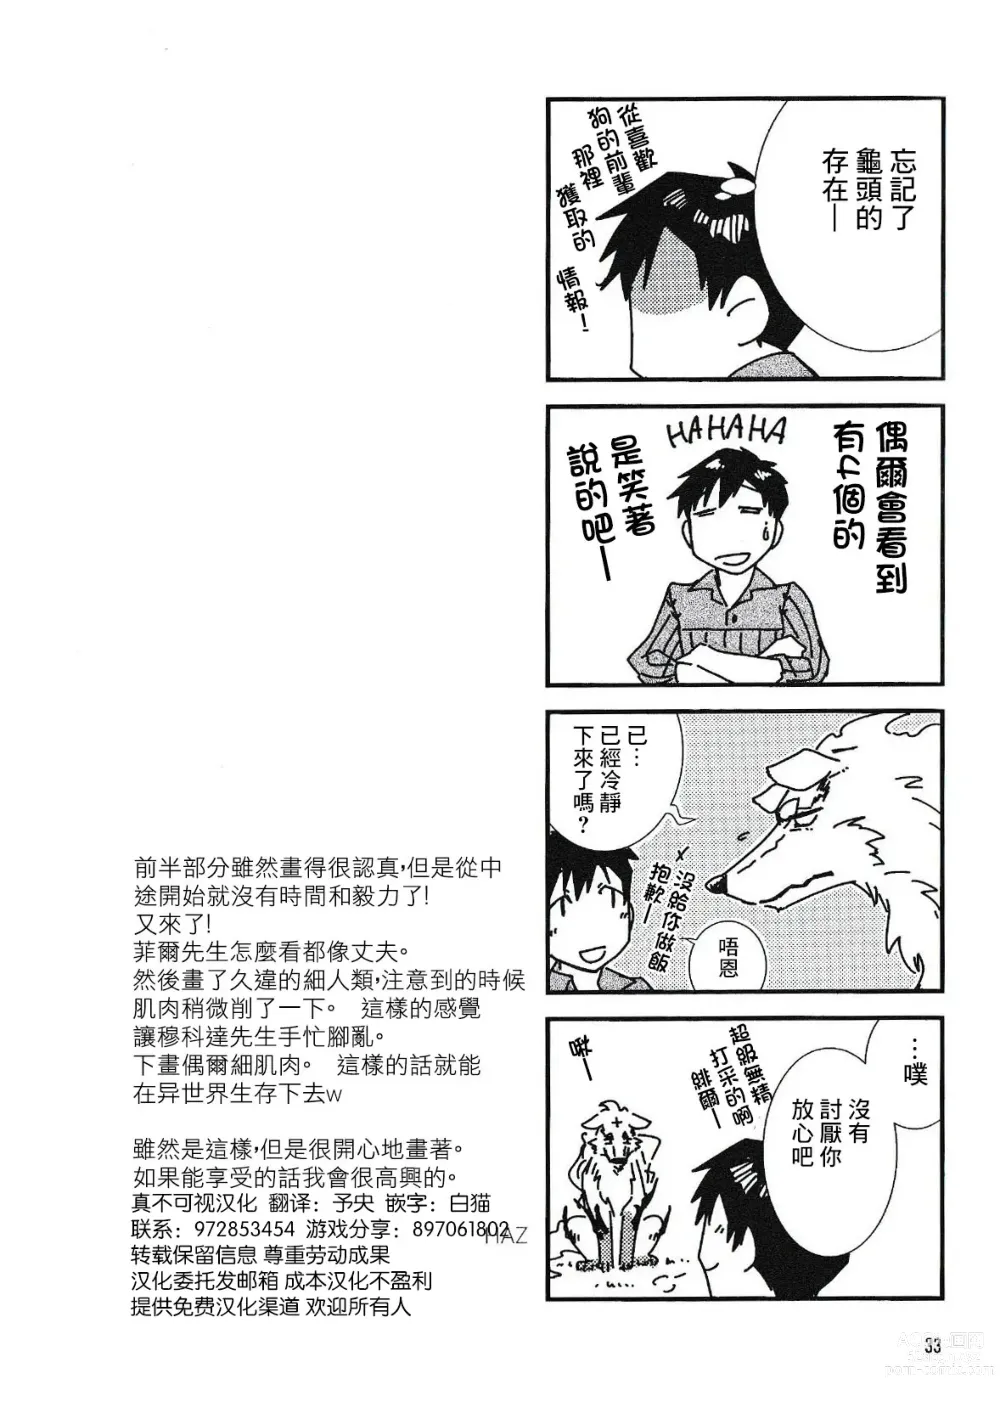 Page 33 of doujinshi NO WONDER!